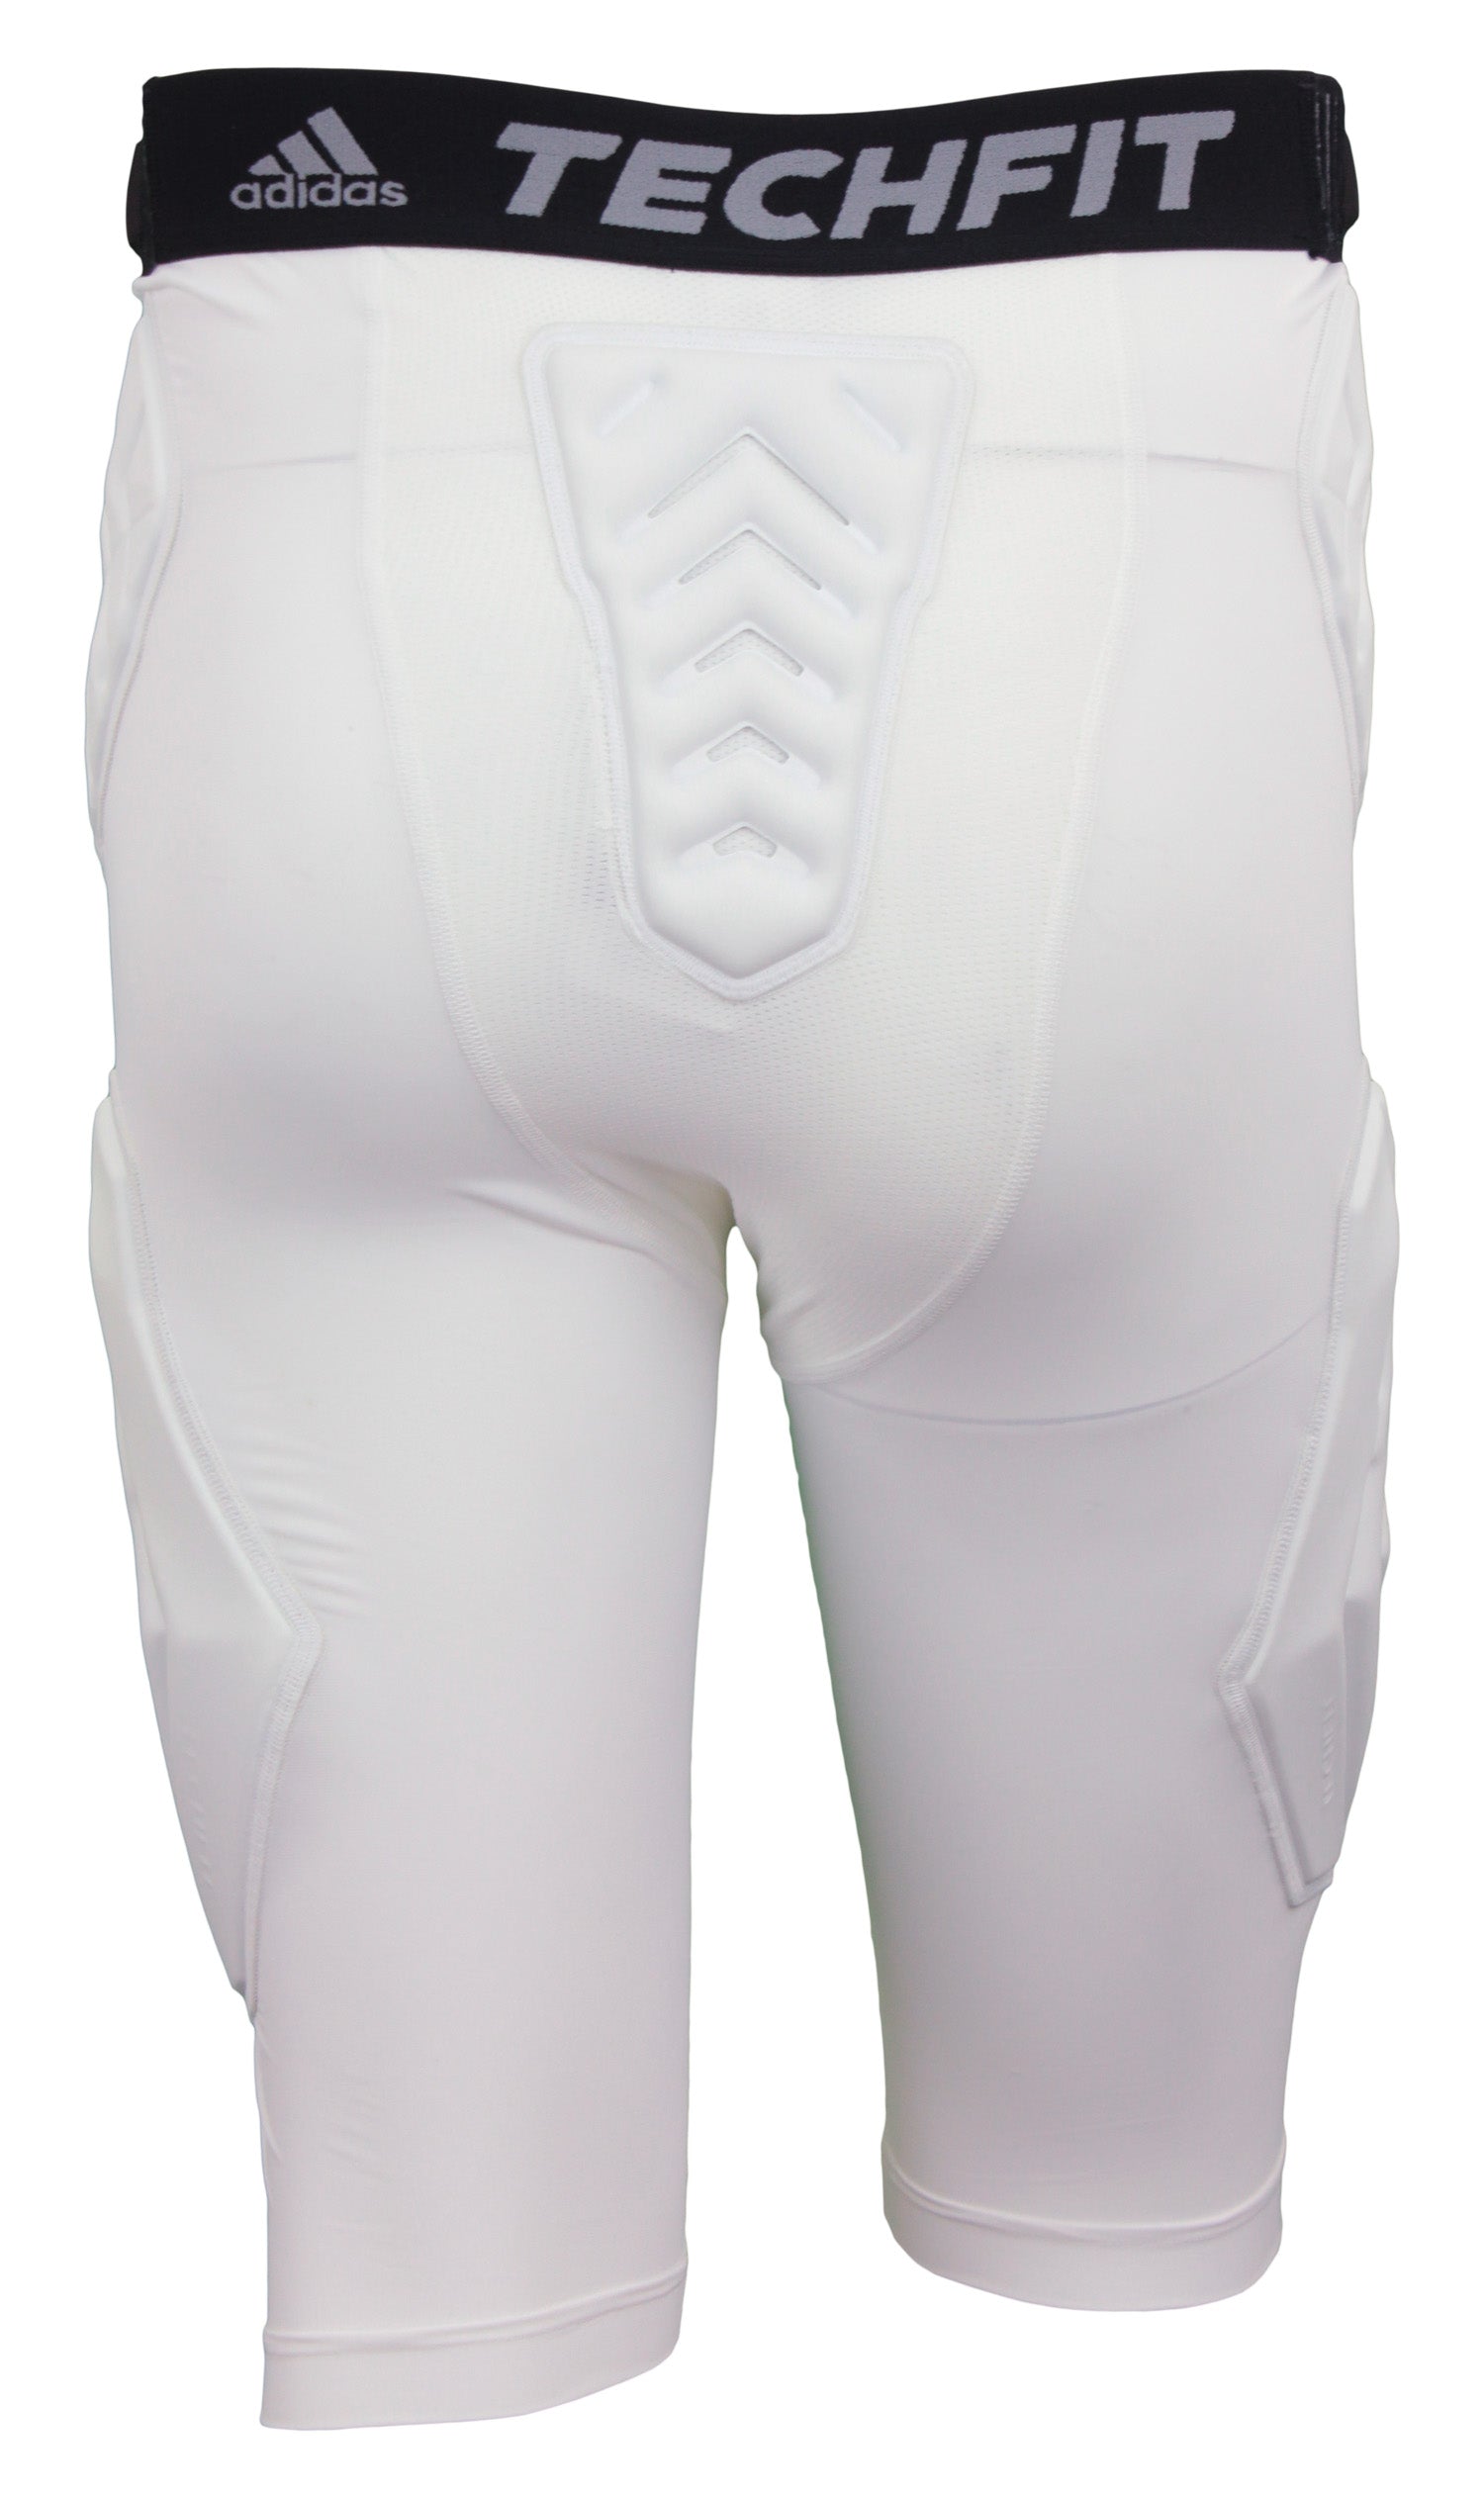 Men’s Adidas TechFit CLIMALITE 3-Pad Padded White Compression Shorts Size  XL NWT